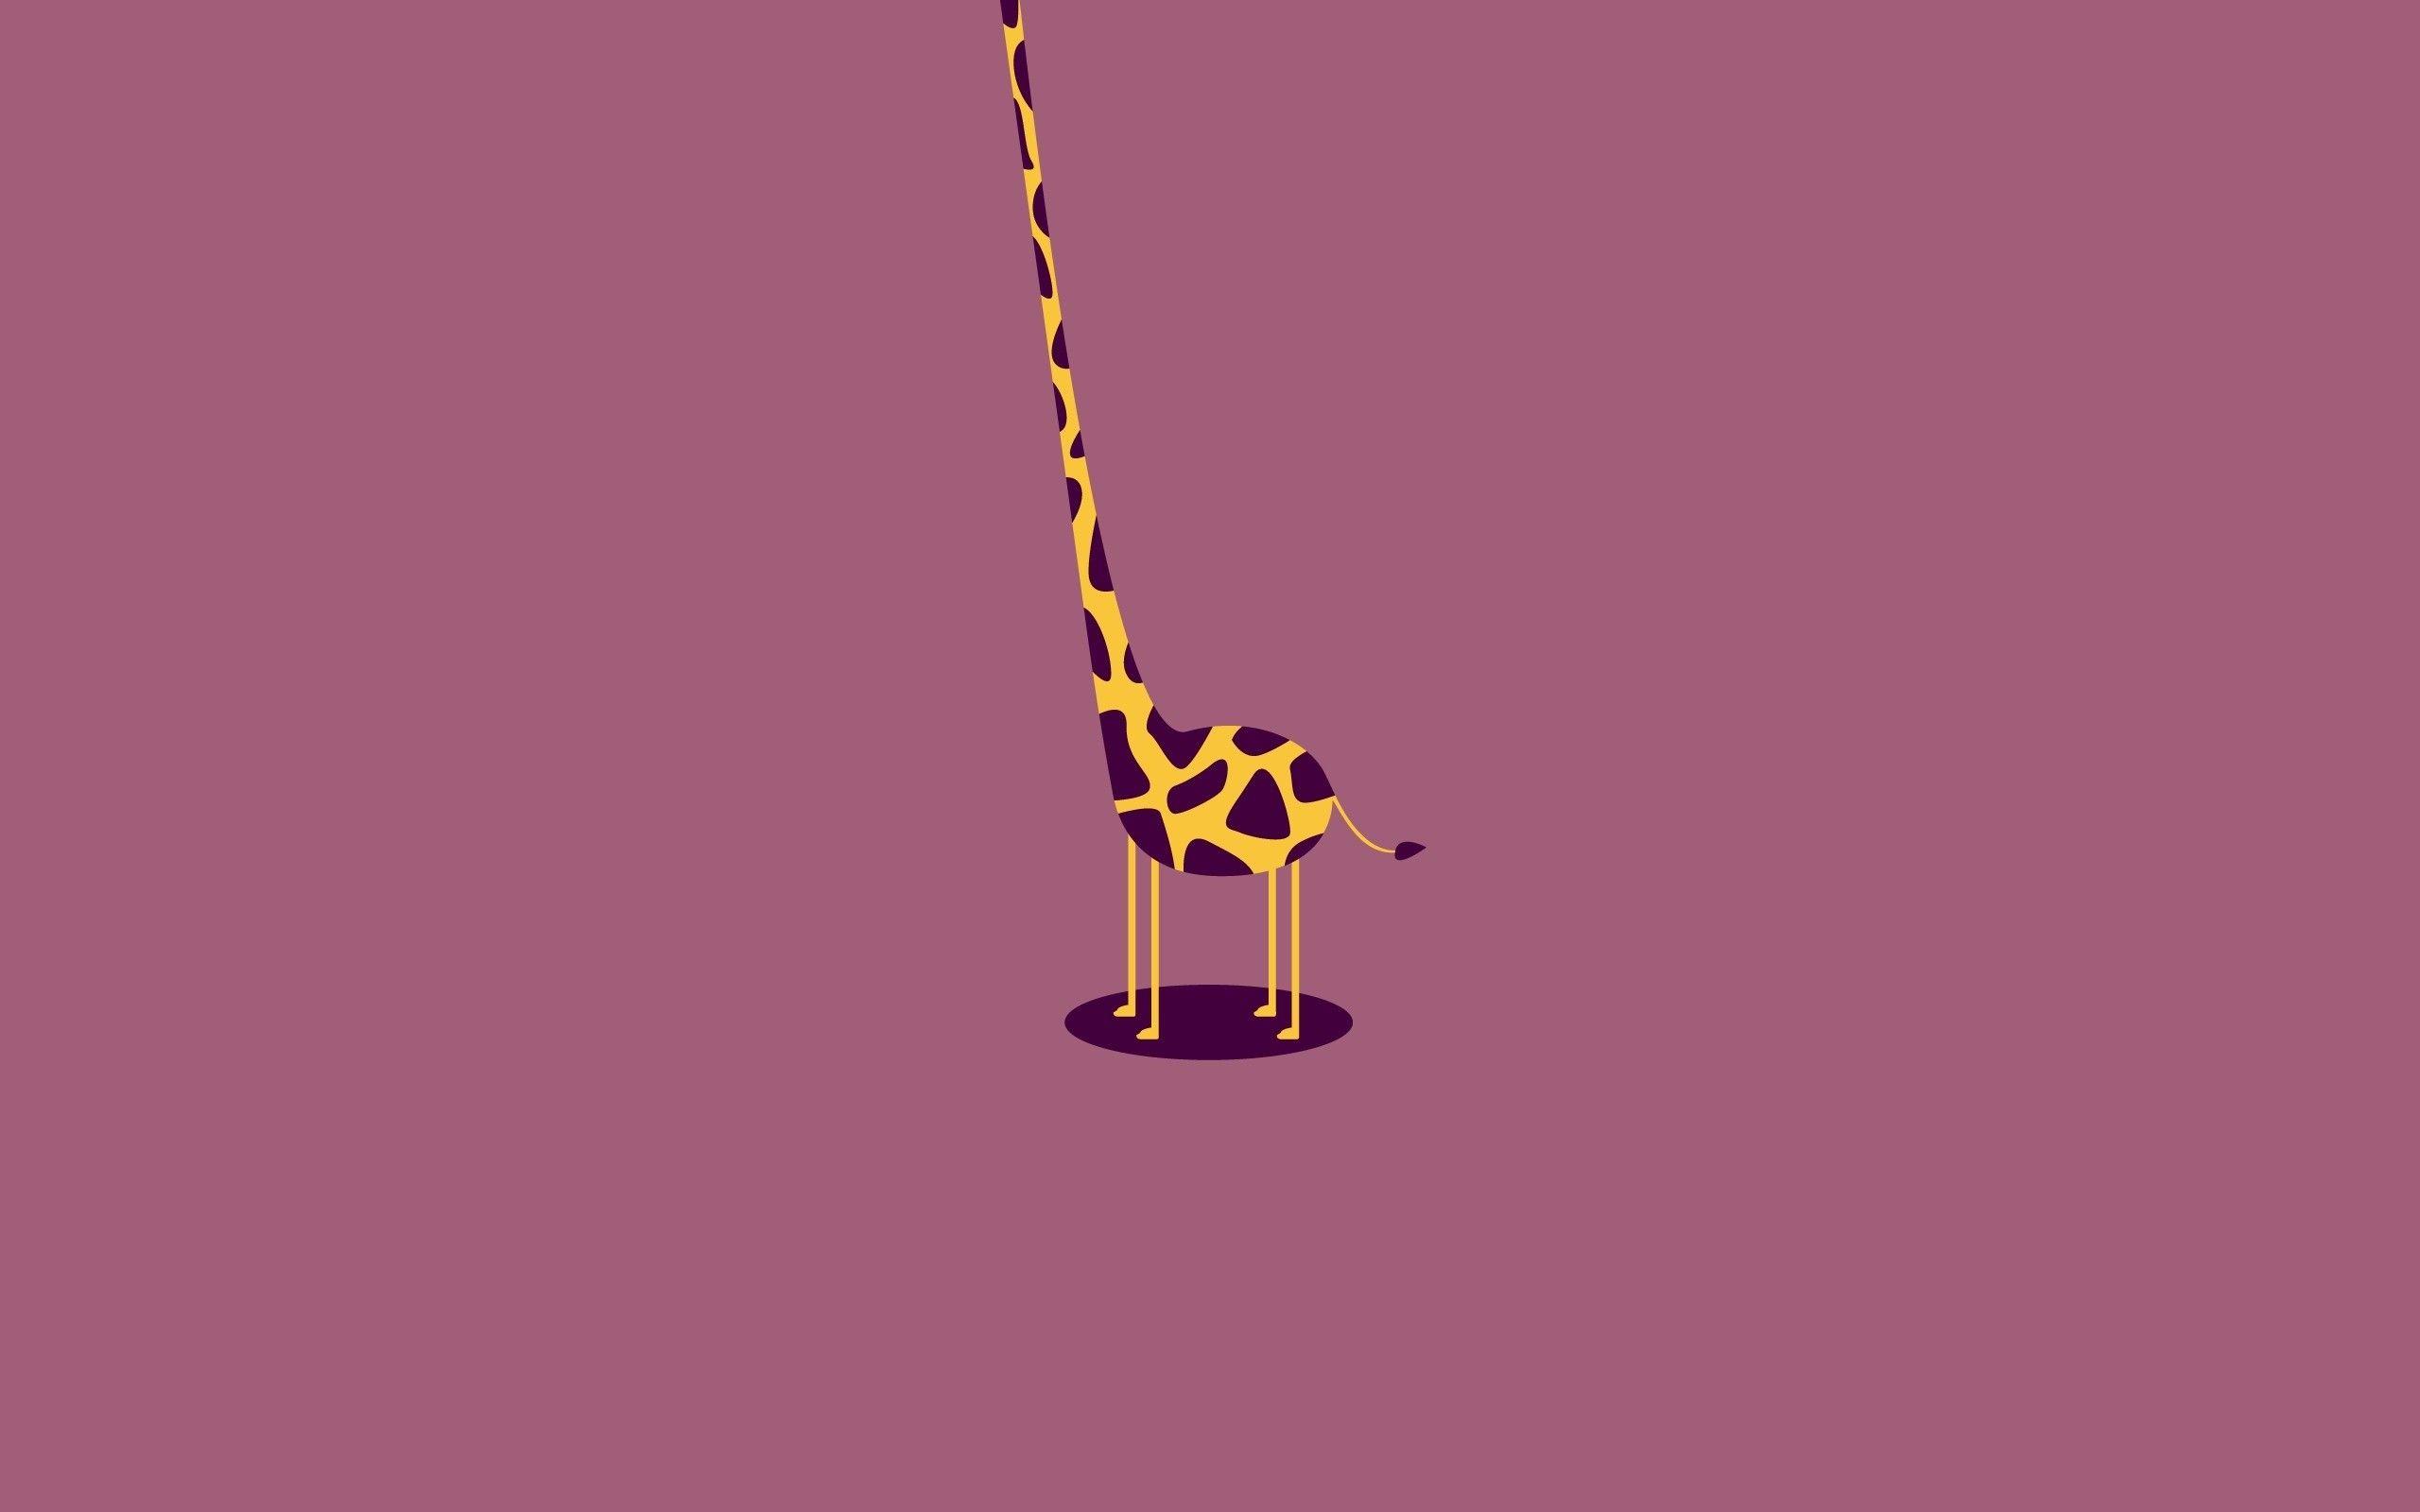 Free Stretching Giraffe Wallpaper, Free Stretching Giraffe HD